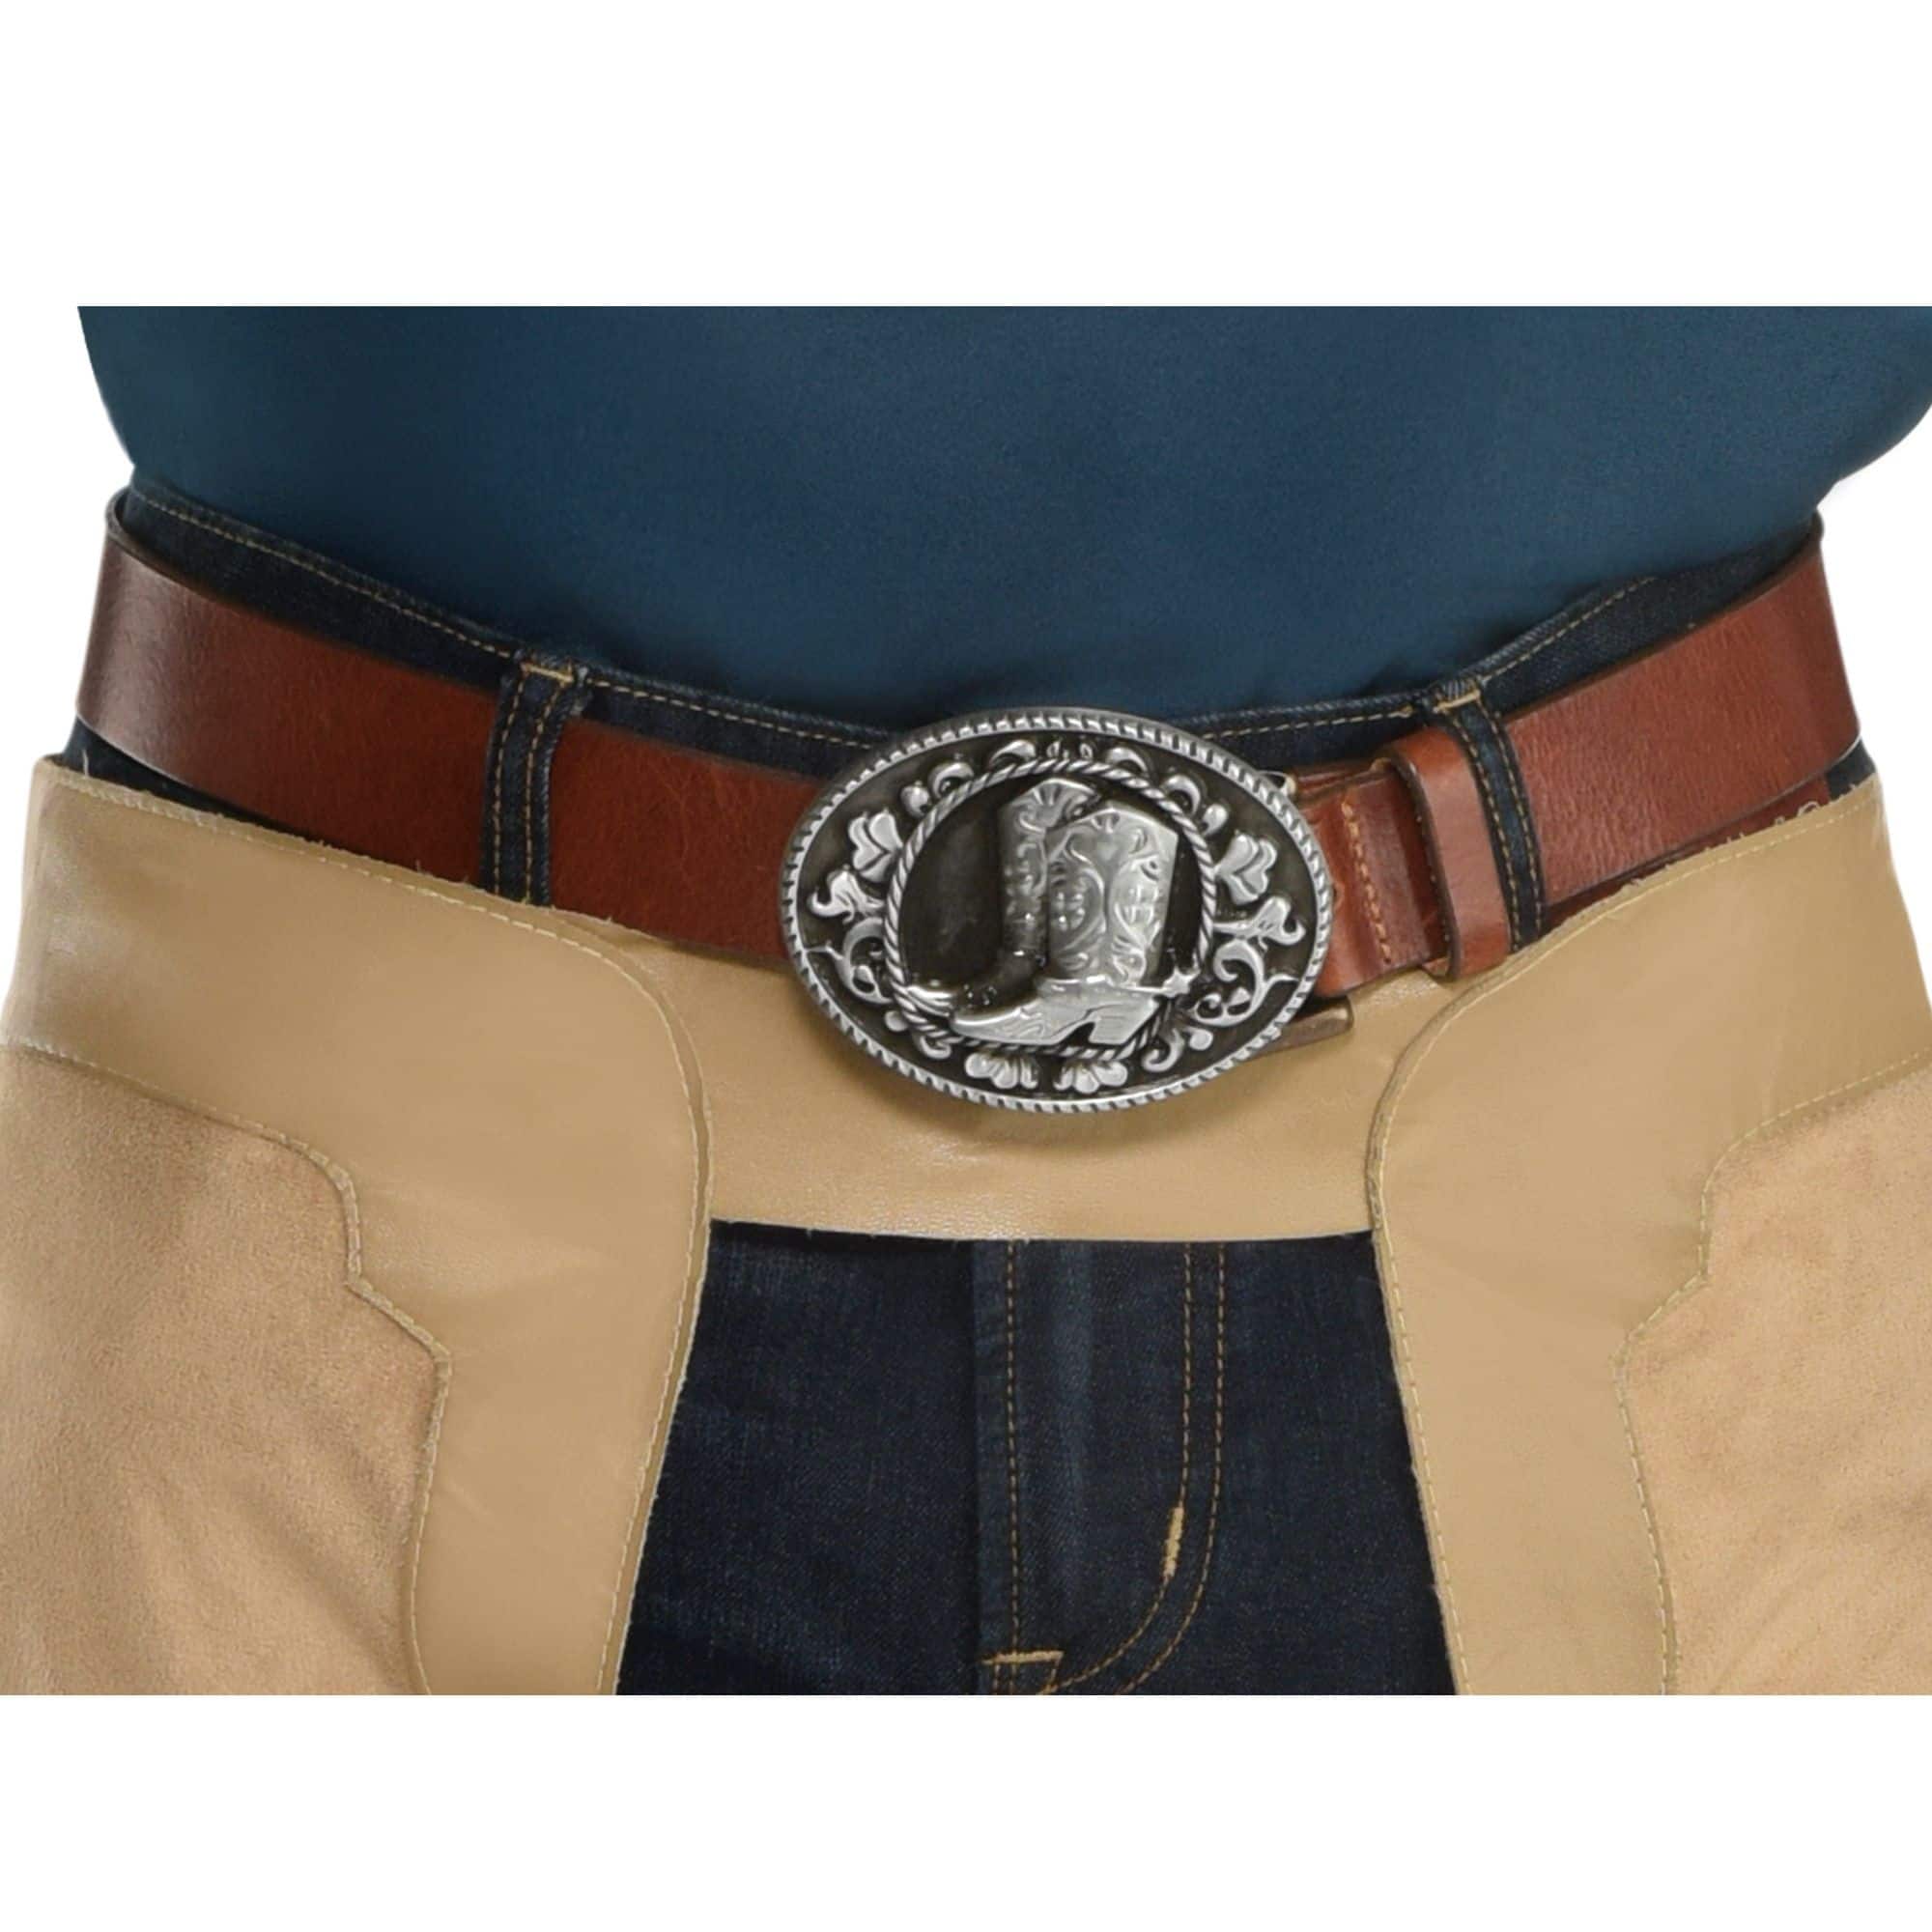 New Large Size Initial Letter V Western Cowboy Belt Buckle